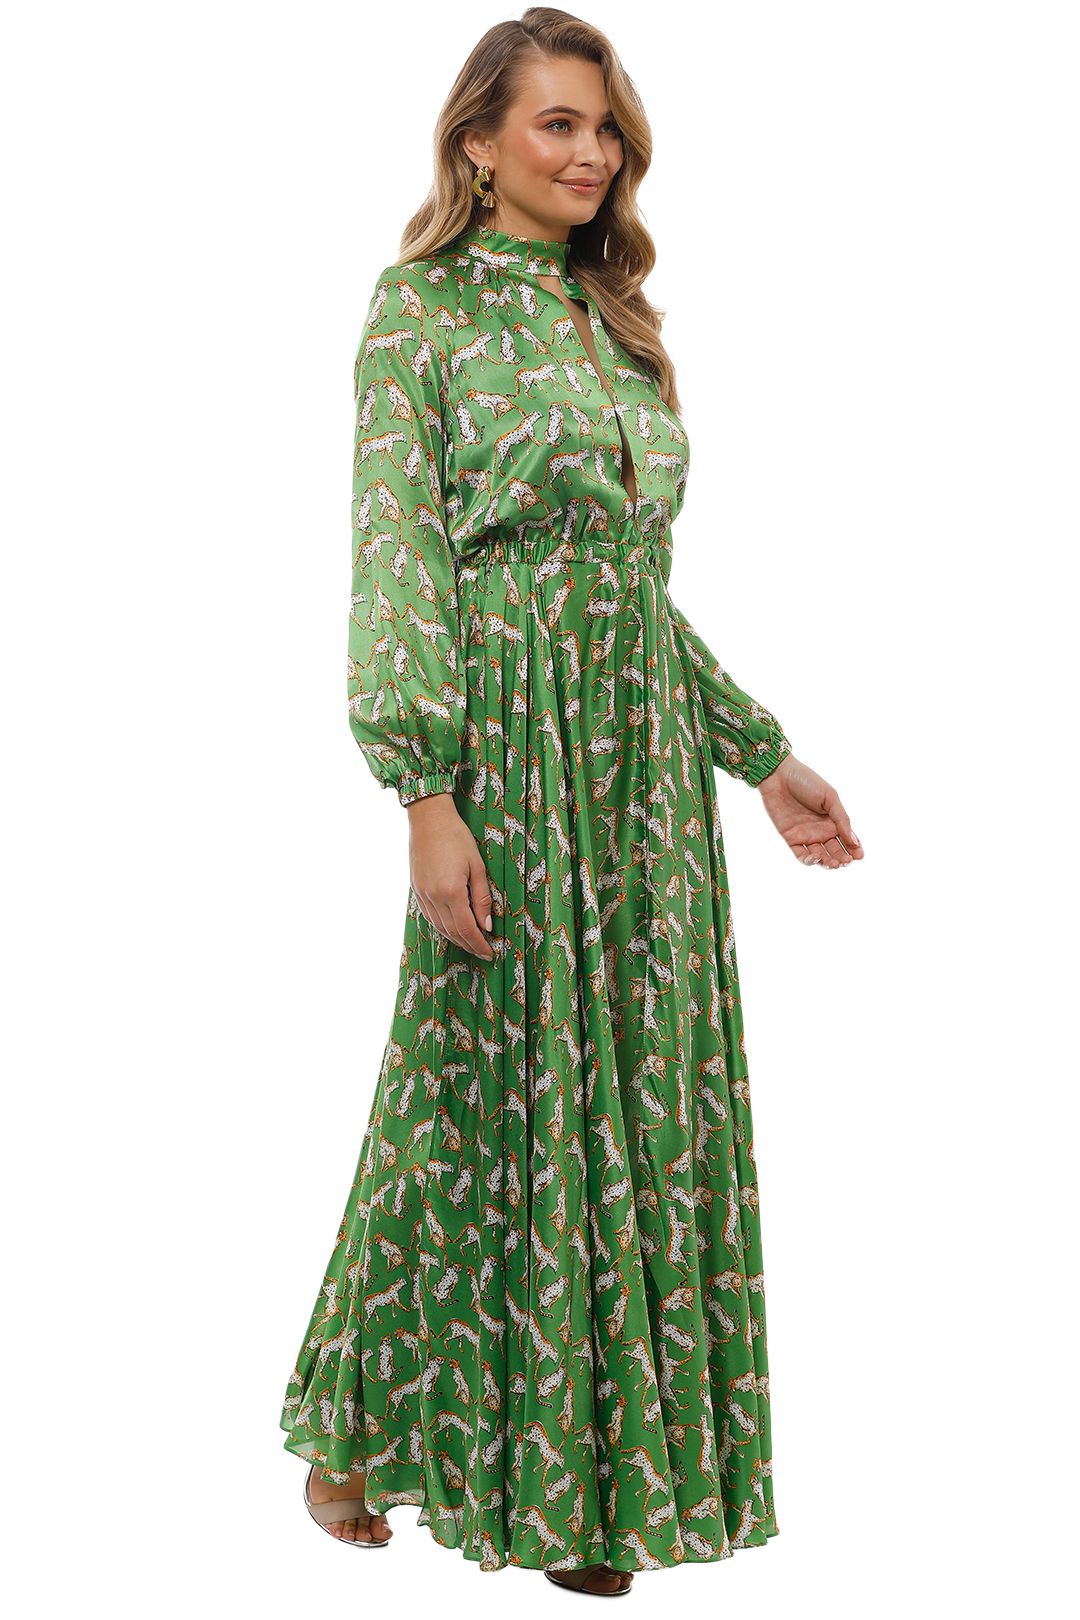 Milly - Emmie Dress - Emerald - Side